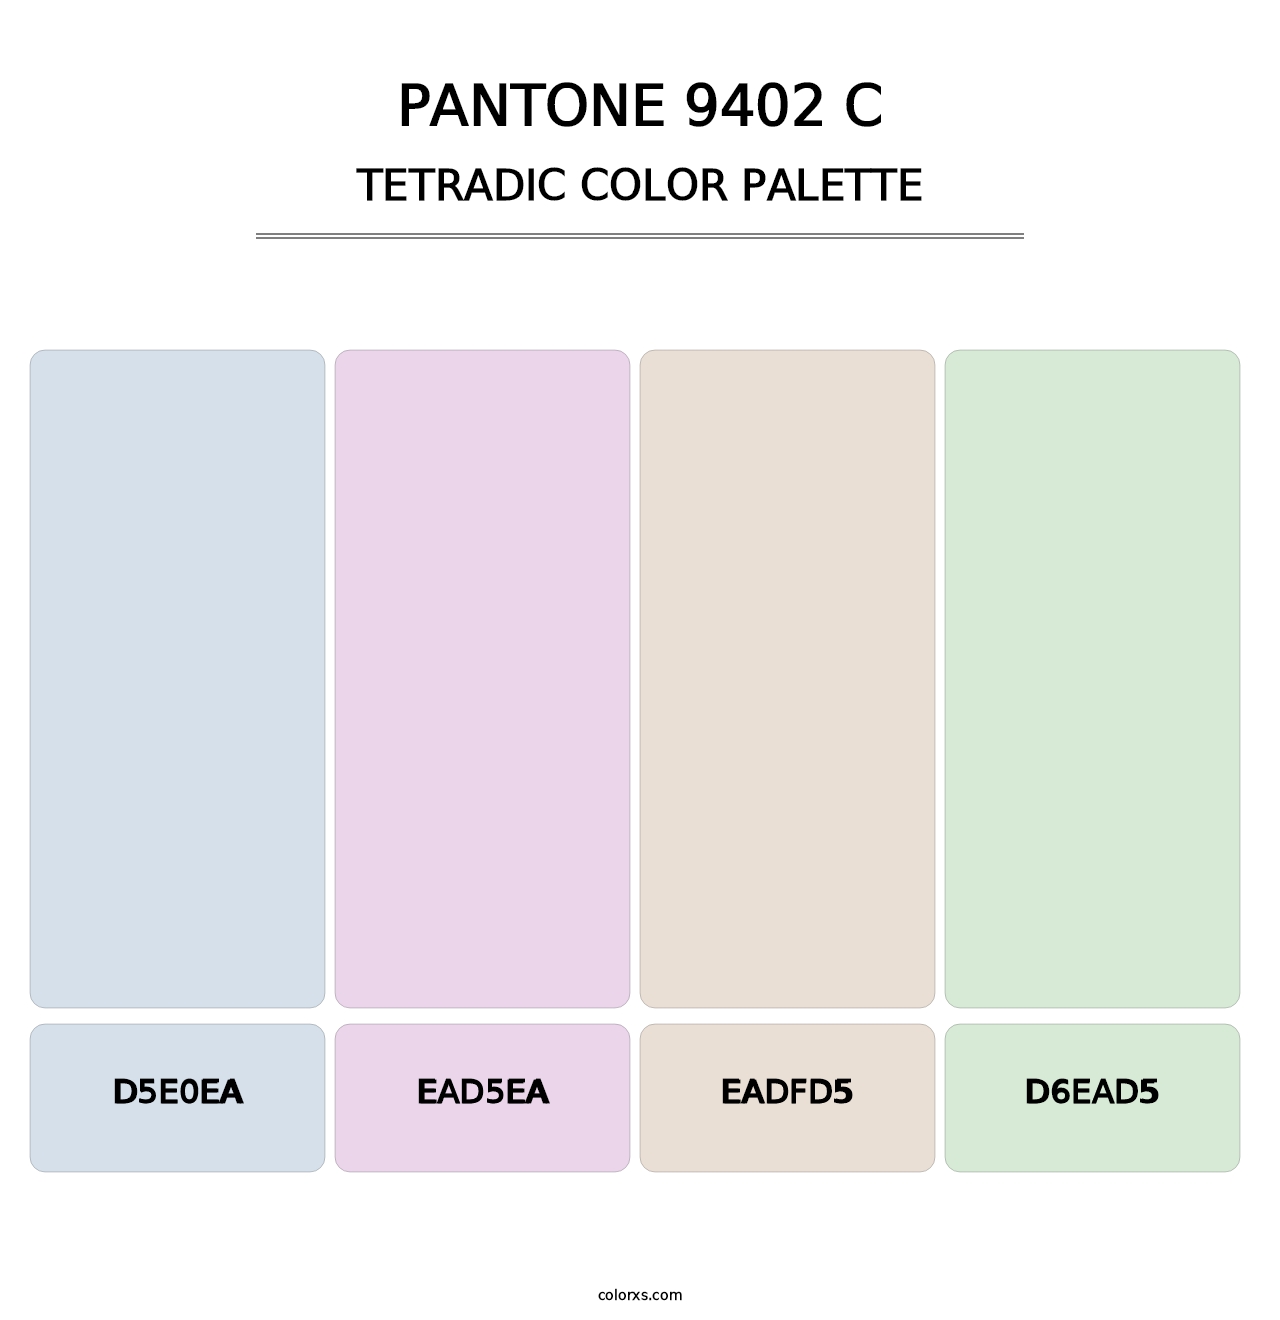 PANTONE 9402 C - Tetradic Color Palette